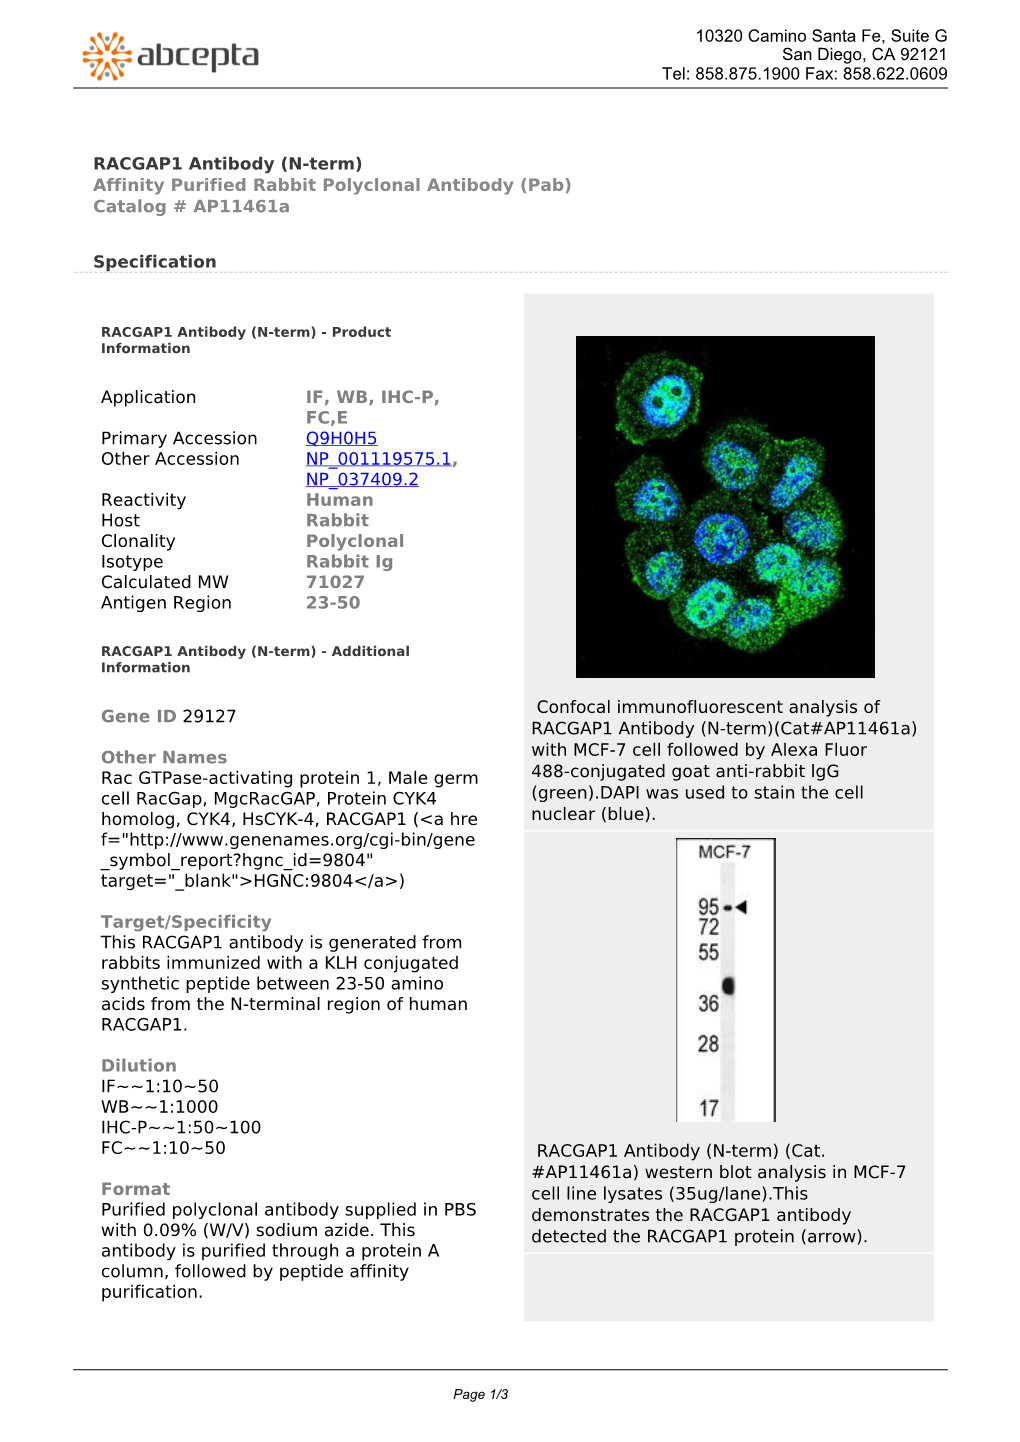 RACGAP1 Antibody (N-Term) Affinity Purified Rabbit Polyclonal Antibody (Pab) Catalog # Ap11461a